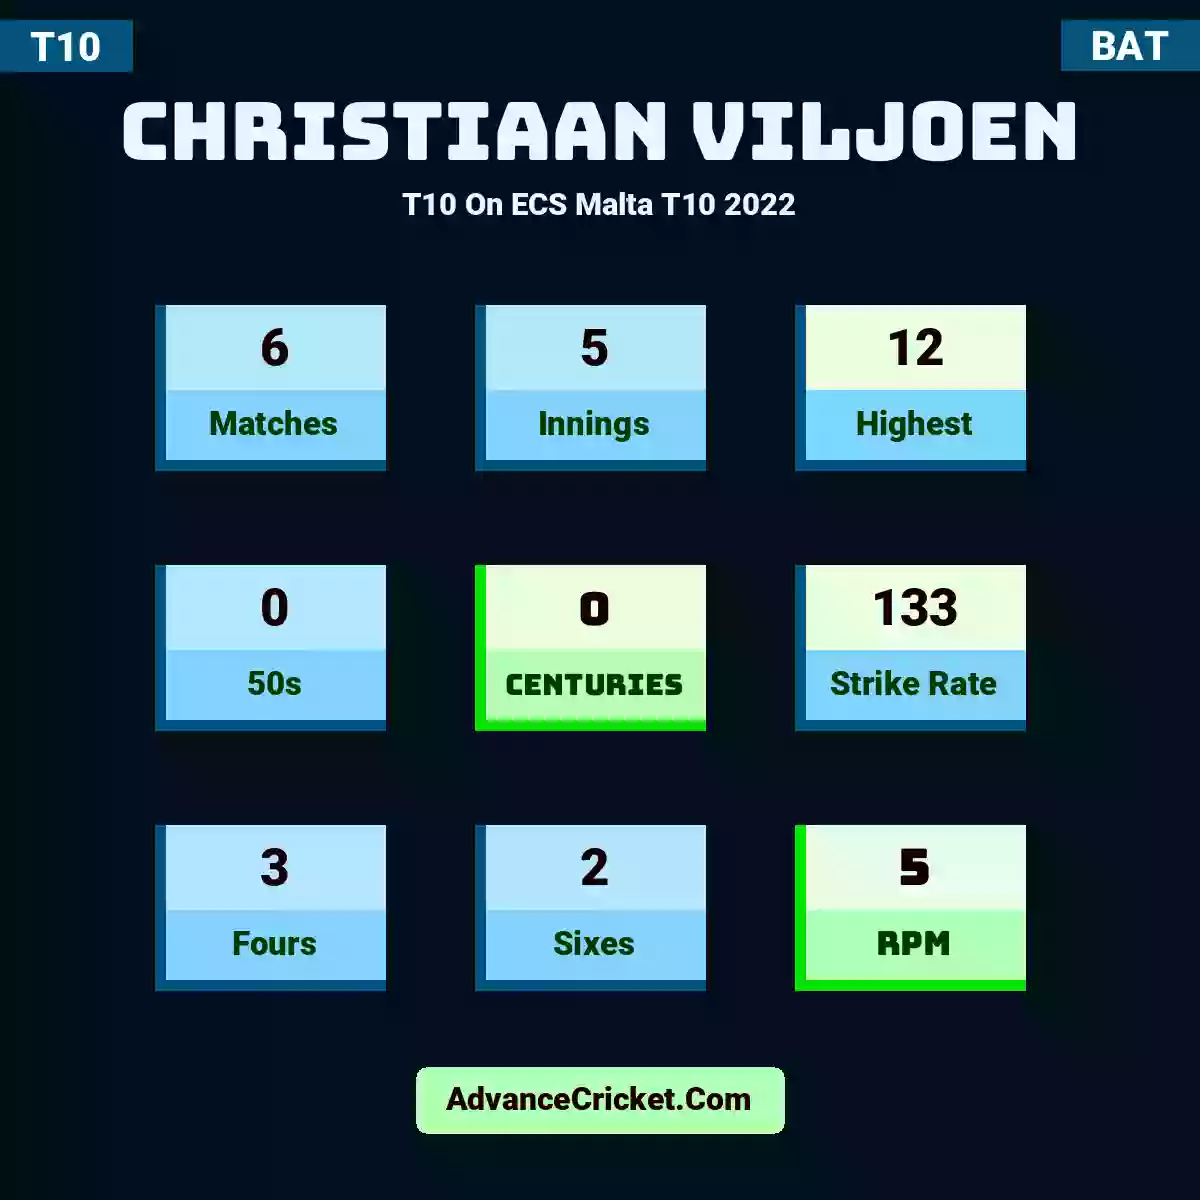 Christiaan Viljoen T10  On ECS Malta T10 2022, Christiaan Viljoen played 6 matches, scored 12 runs as highest, 0 half-centuries, and 0 centuries, with a strike rate of 133. C.Viljoen hit 3 fours and 2 sixes, with an RPM of 5.